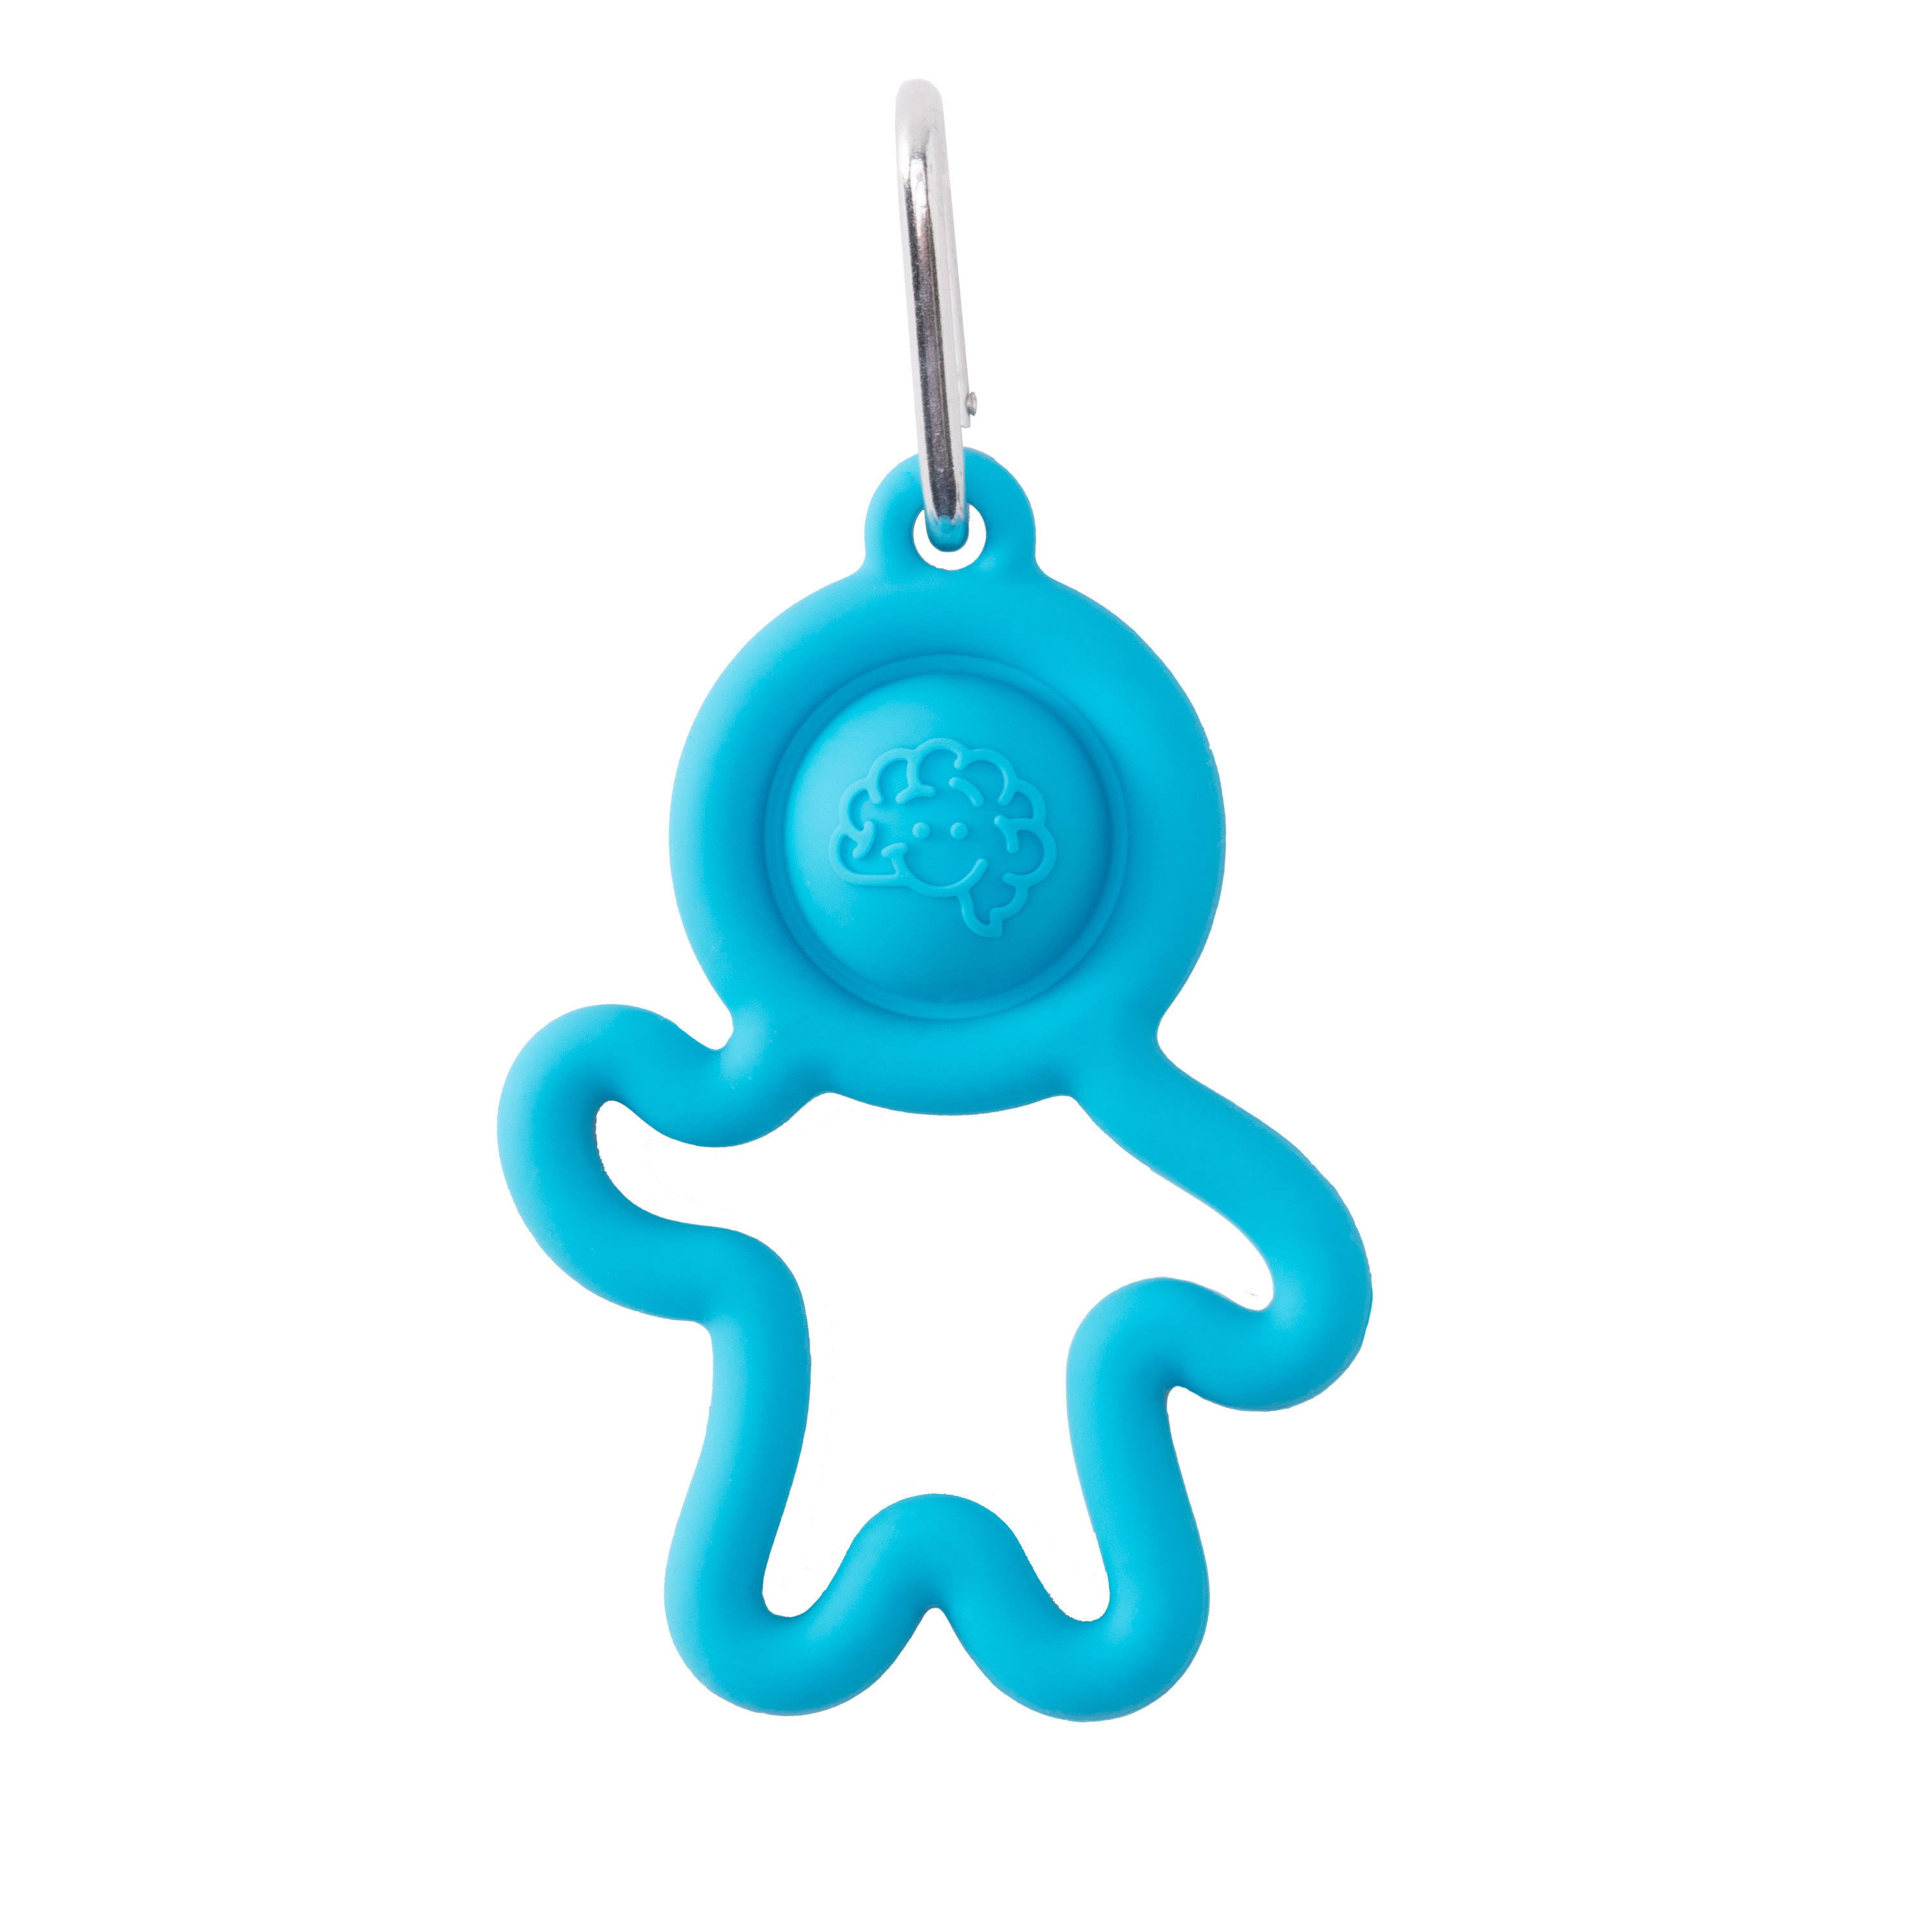 Fat Brain Toys - Lil' DIMPL Keychain Blue